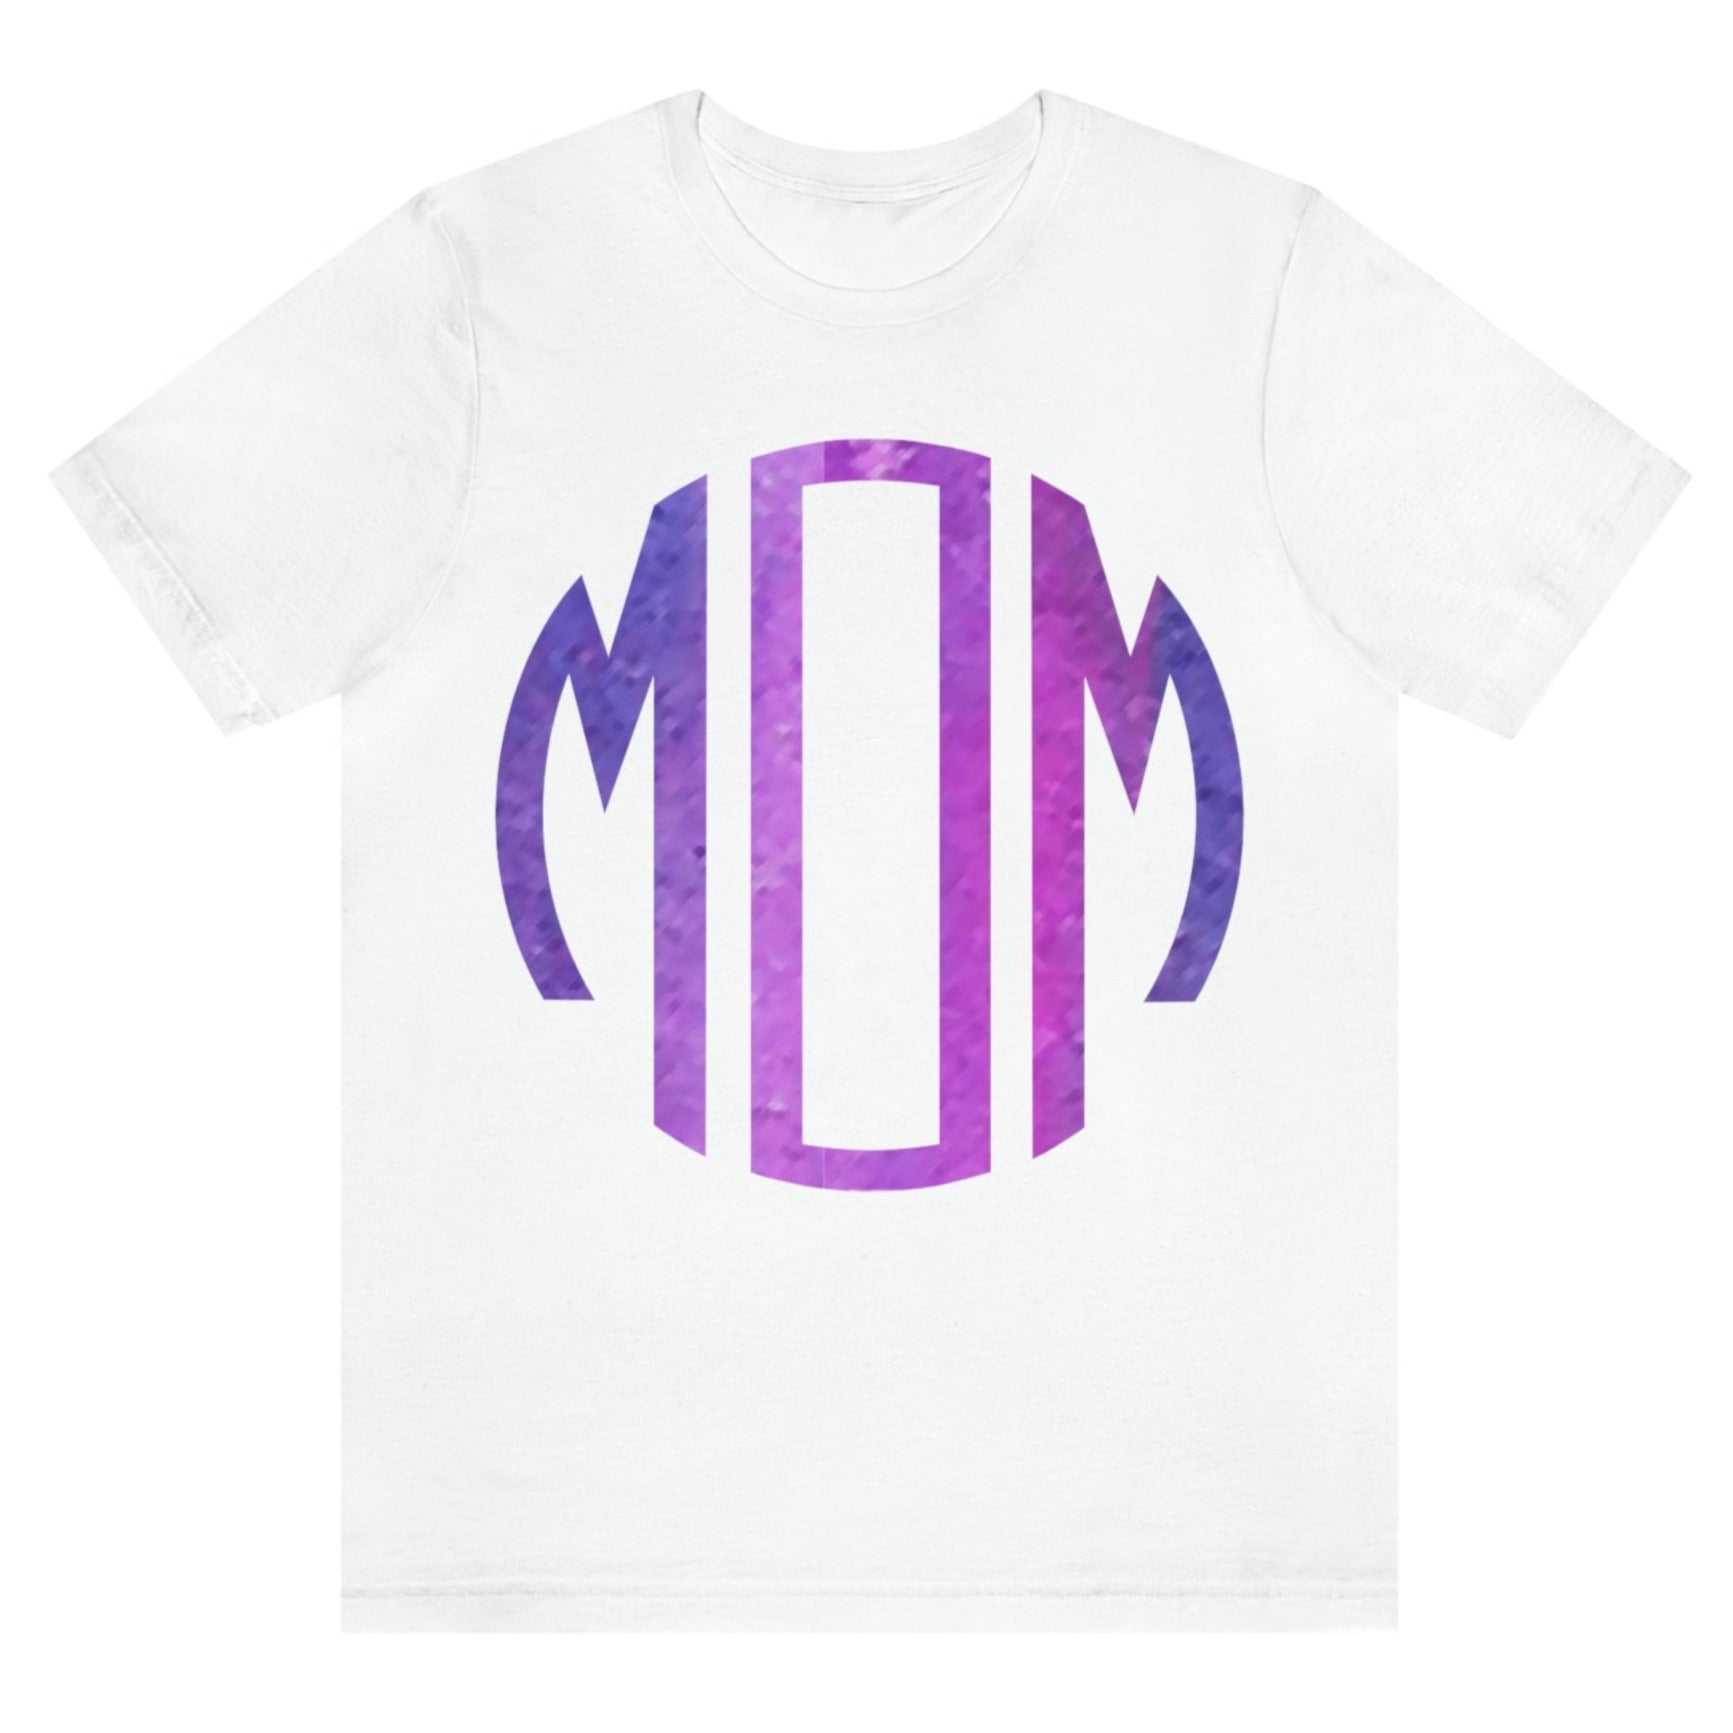 mom-purple-design-white-t-shirt-womens